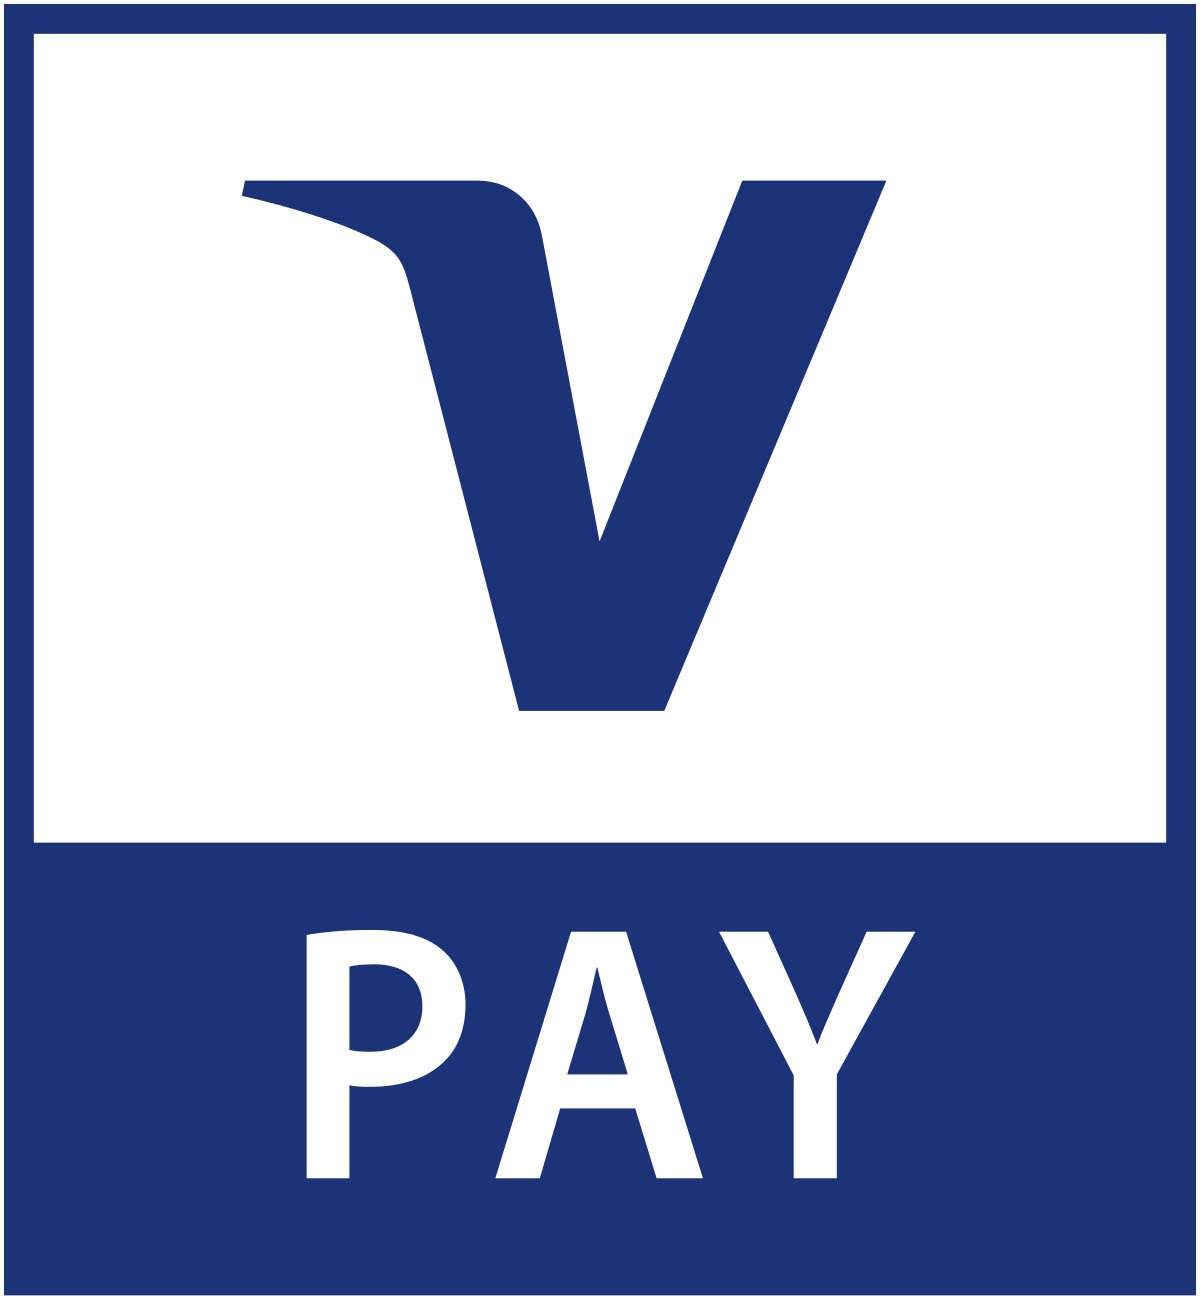 VPay logo 2015